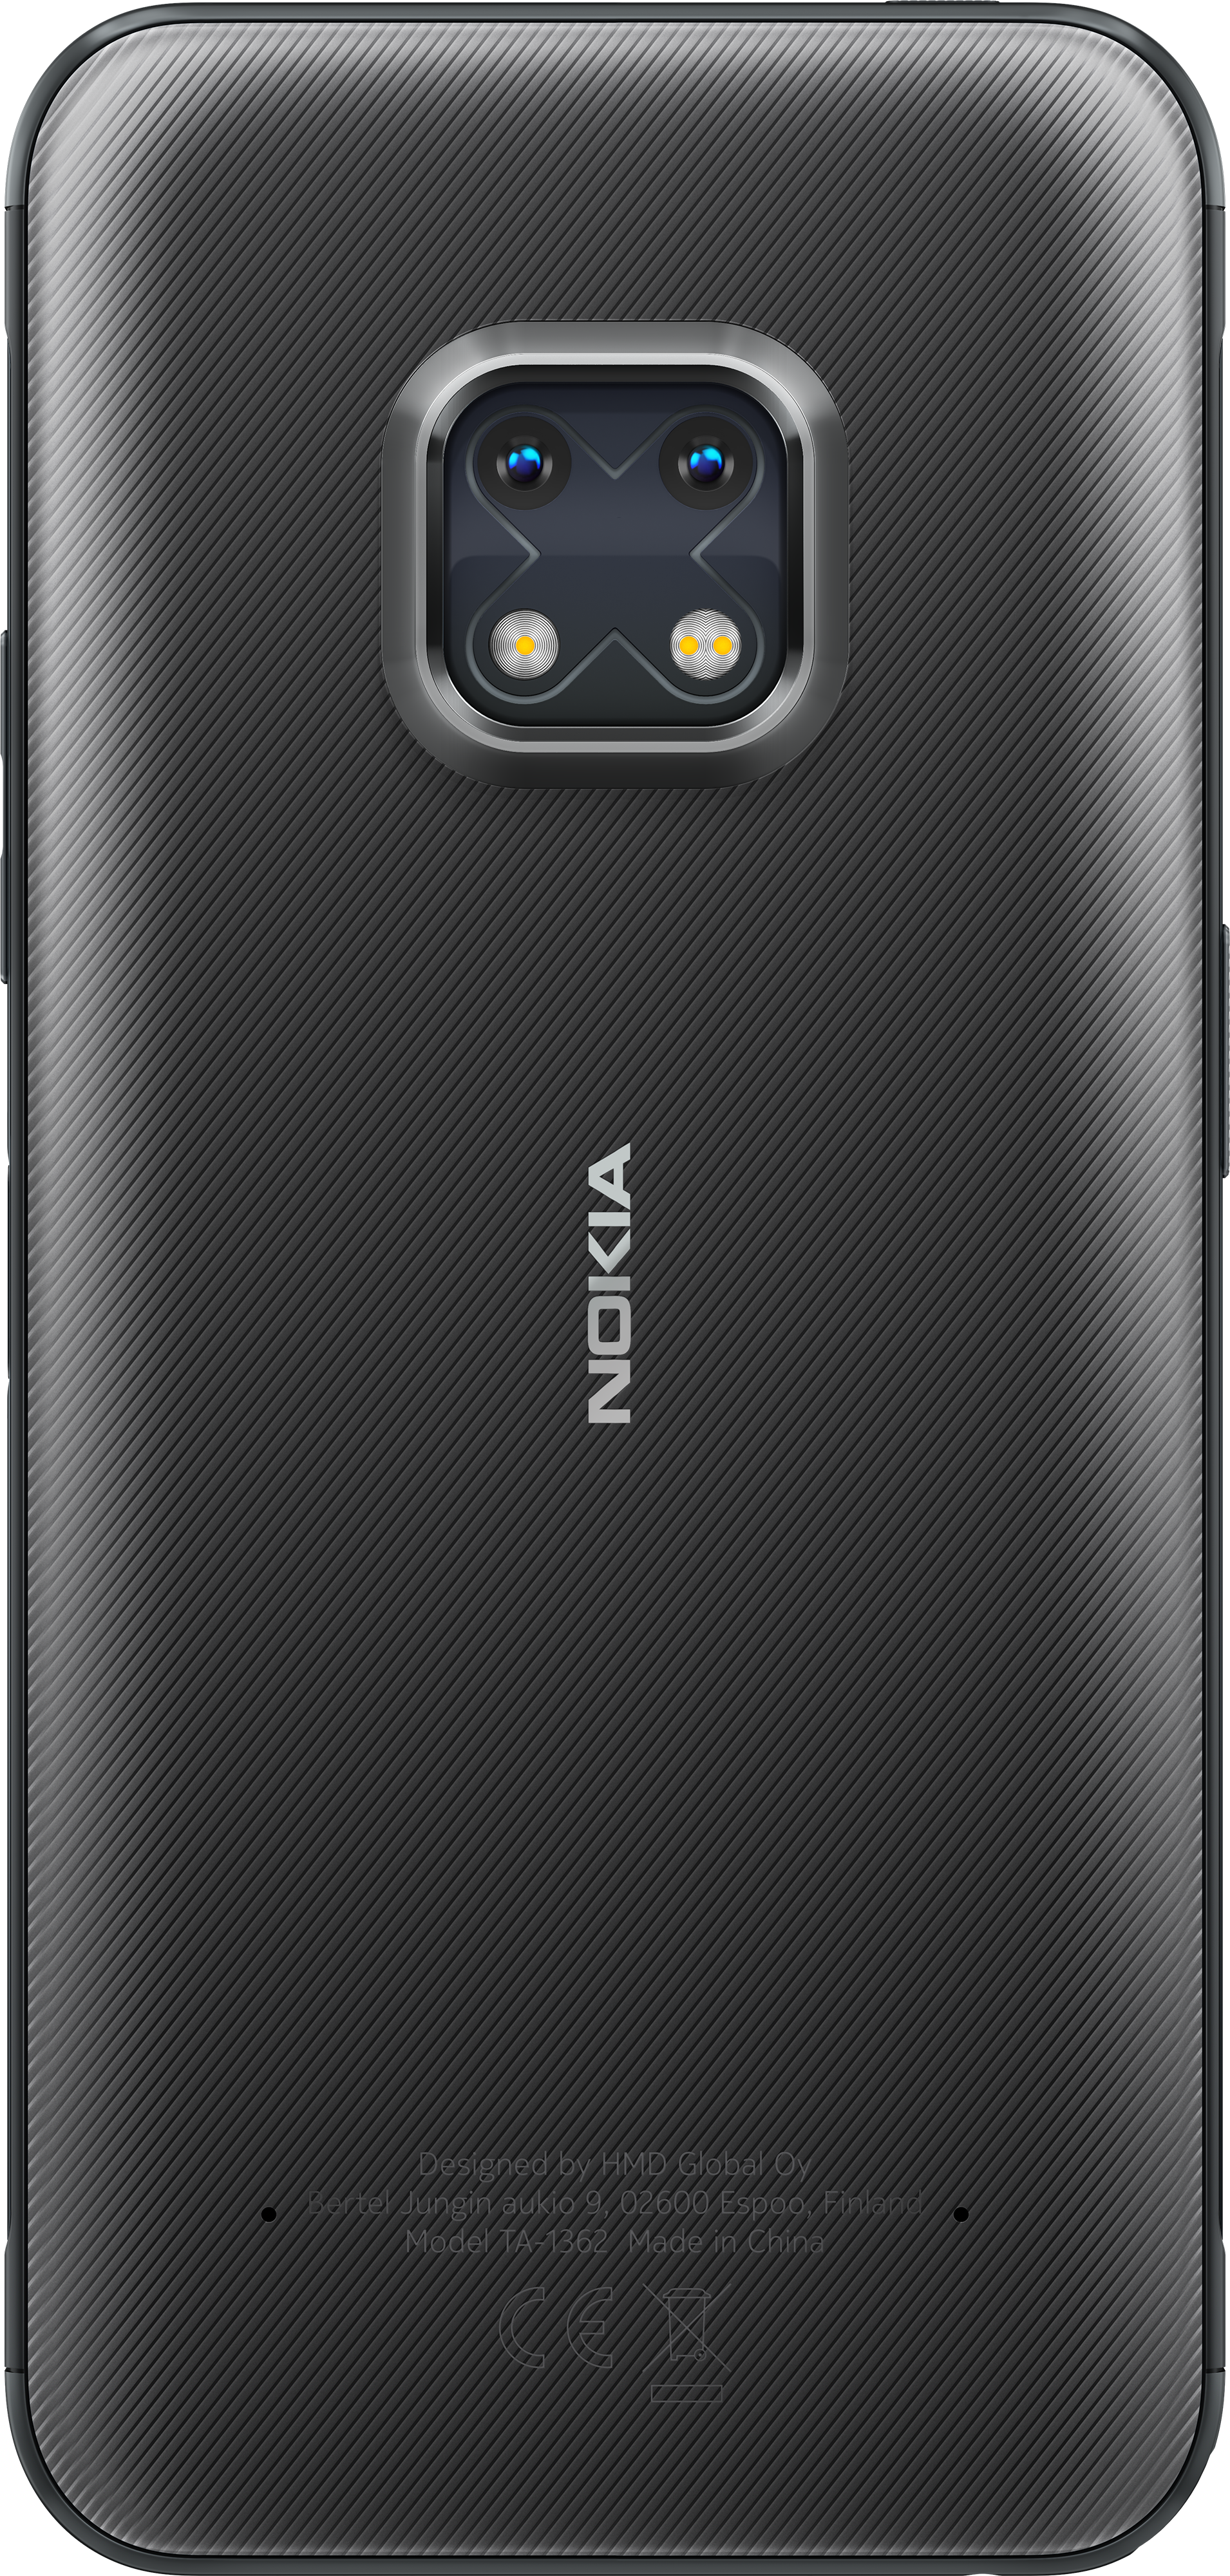 Nokia XR20 smartphone | Best rugged durable phone